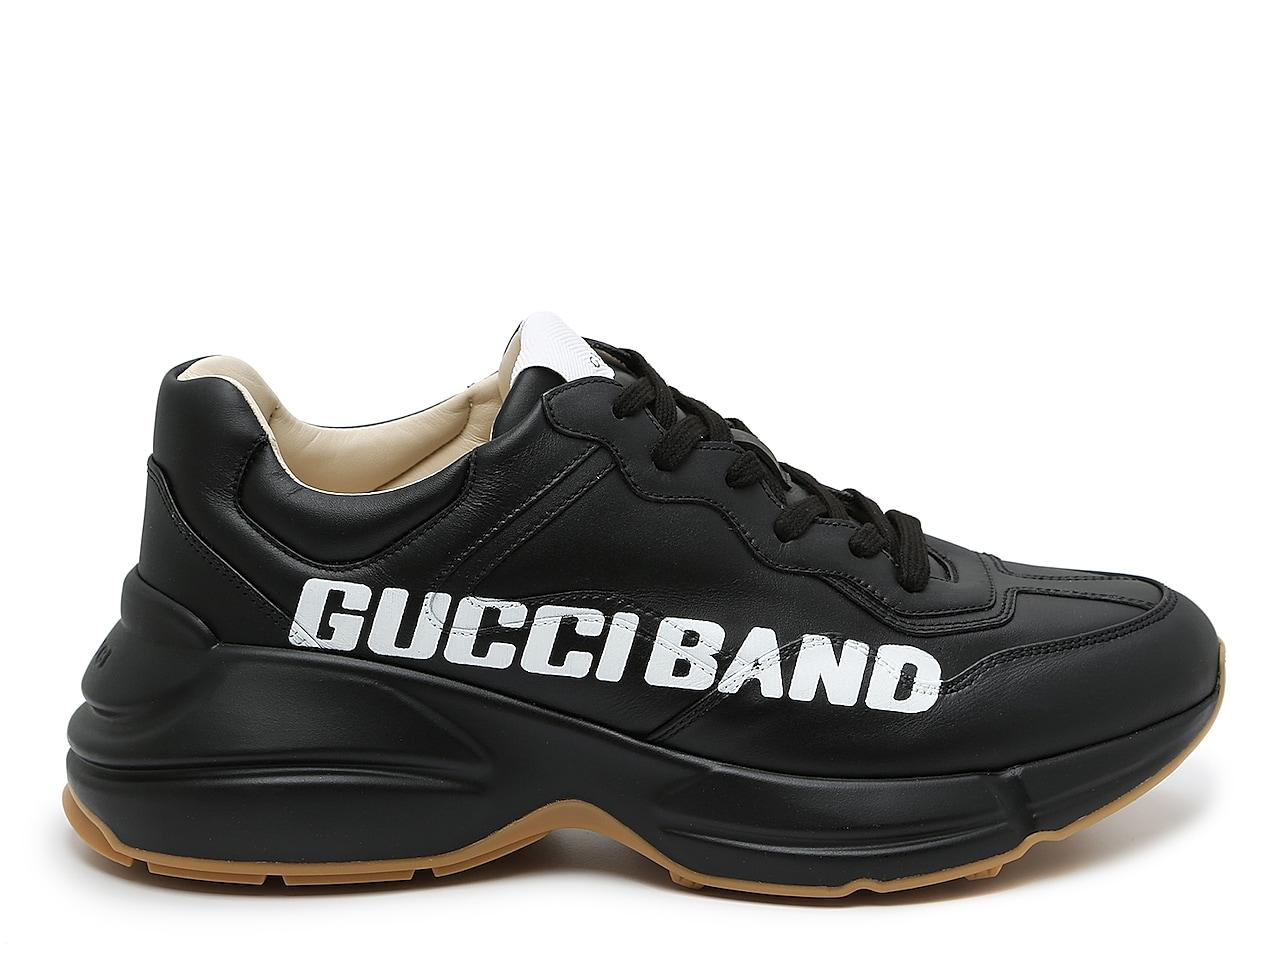 Gucci Leather Rhyton Sneaker in Nero for Men - Lyst